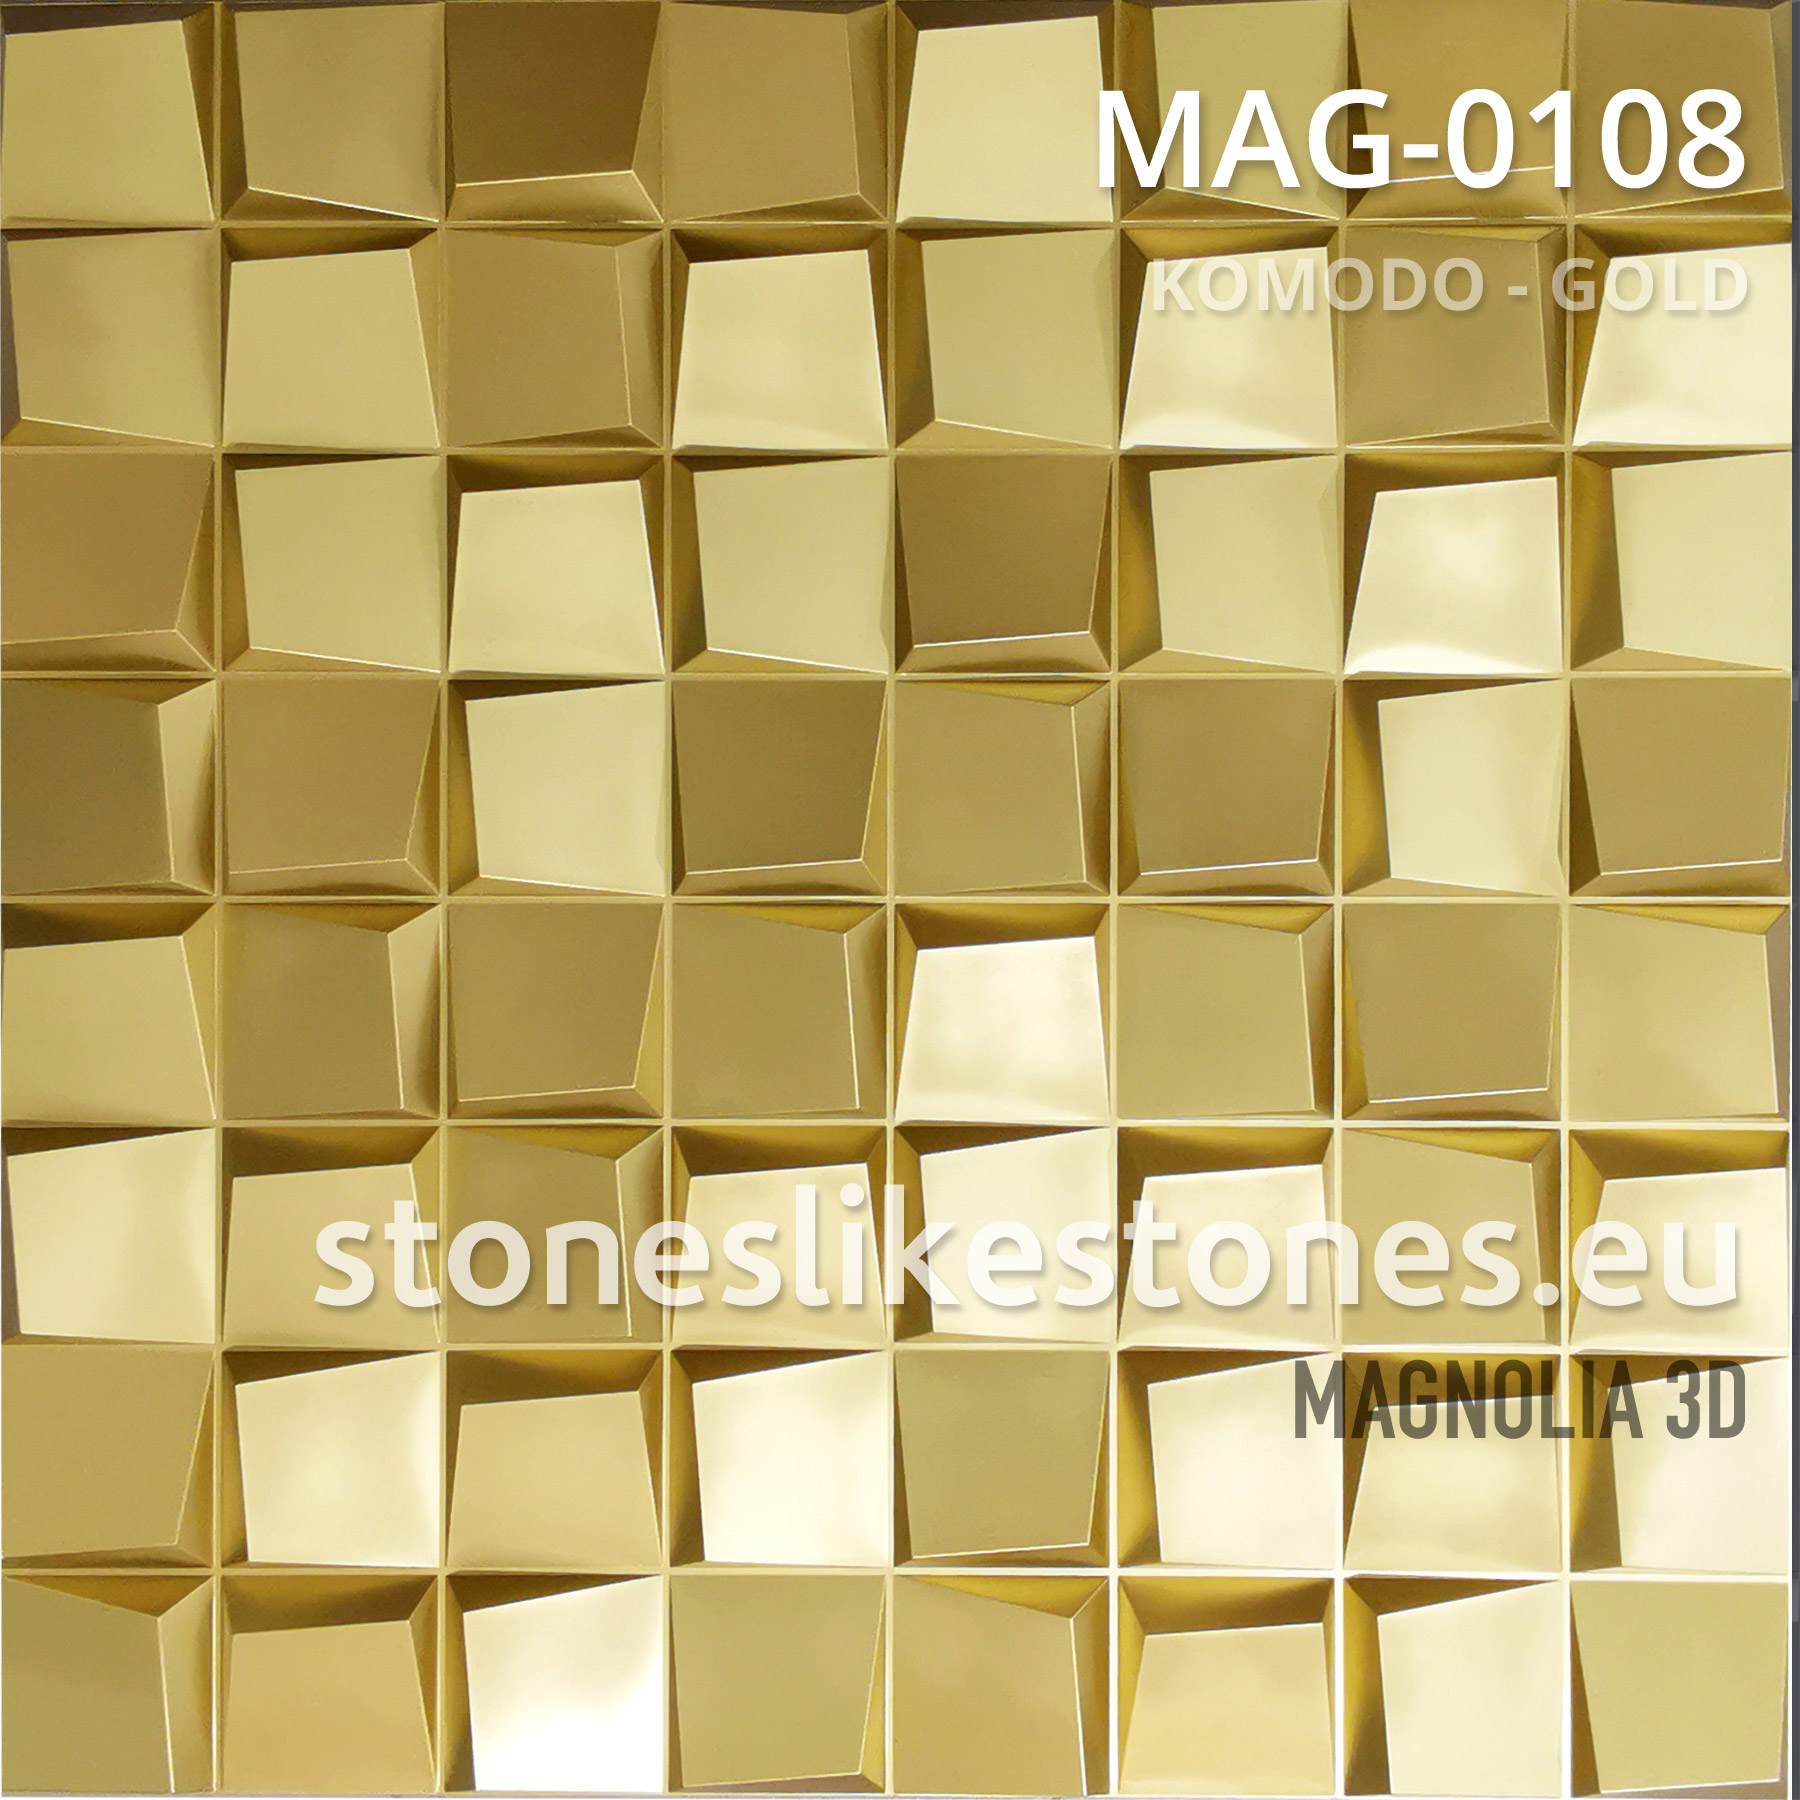 Magnolia 3D – MAG-0108 KOMODO – GOLD